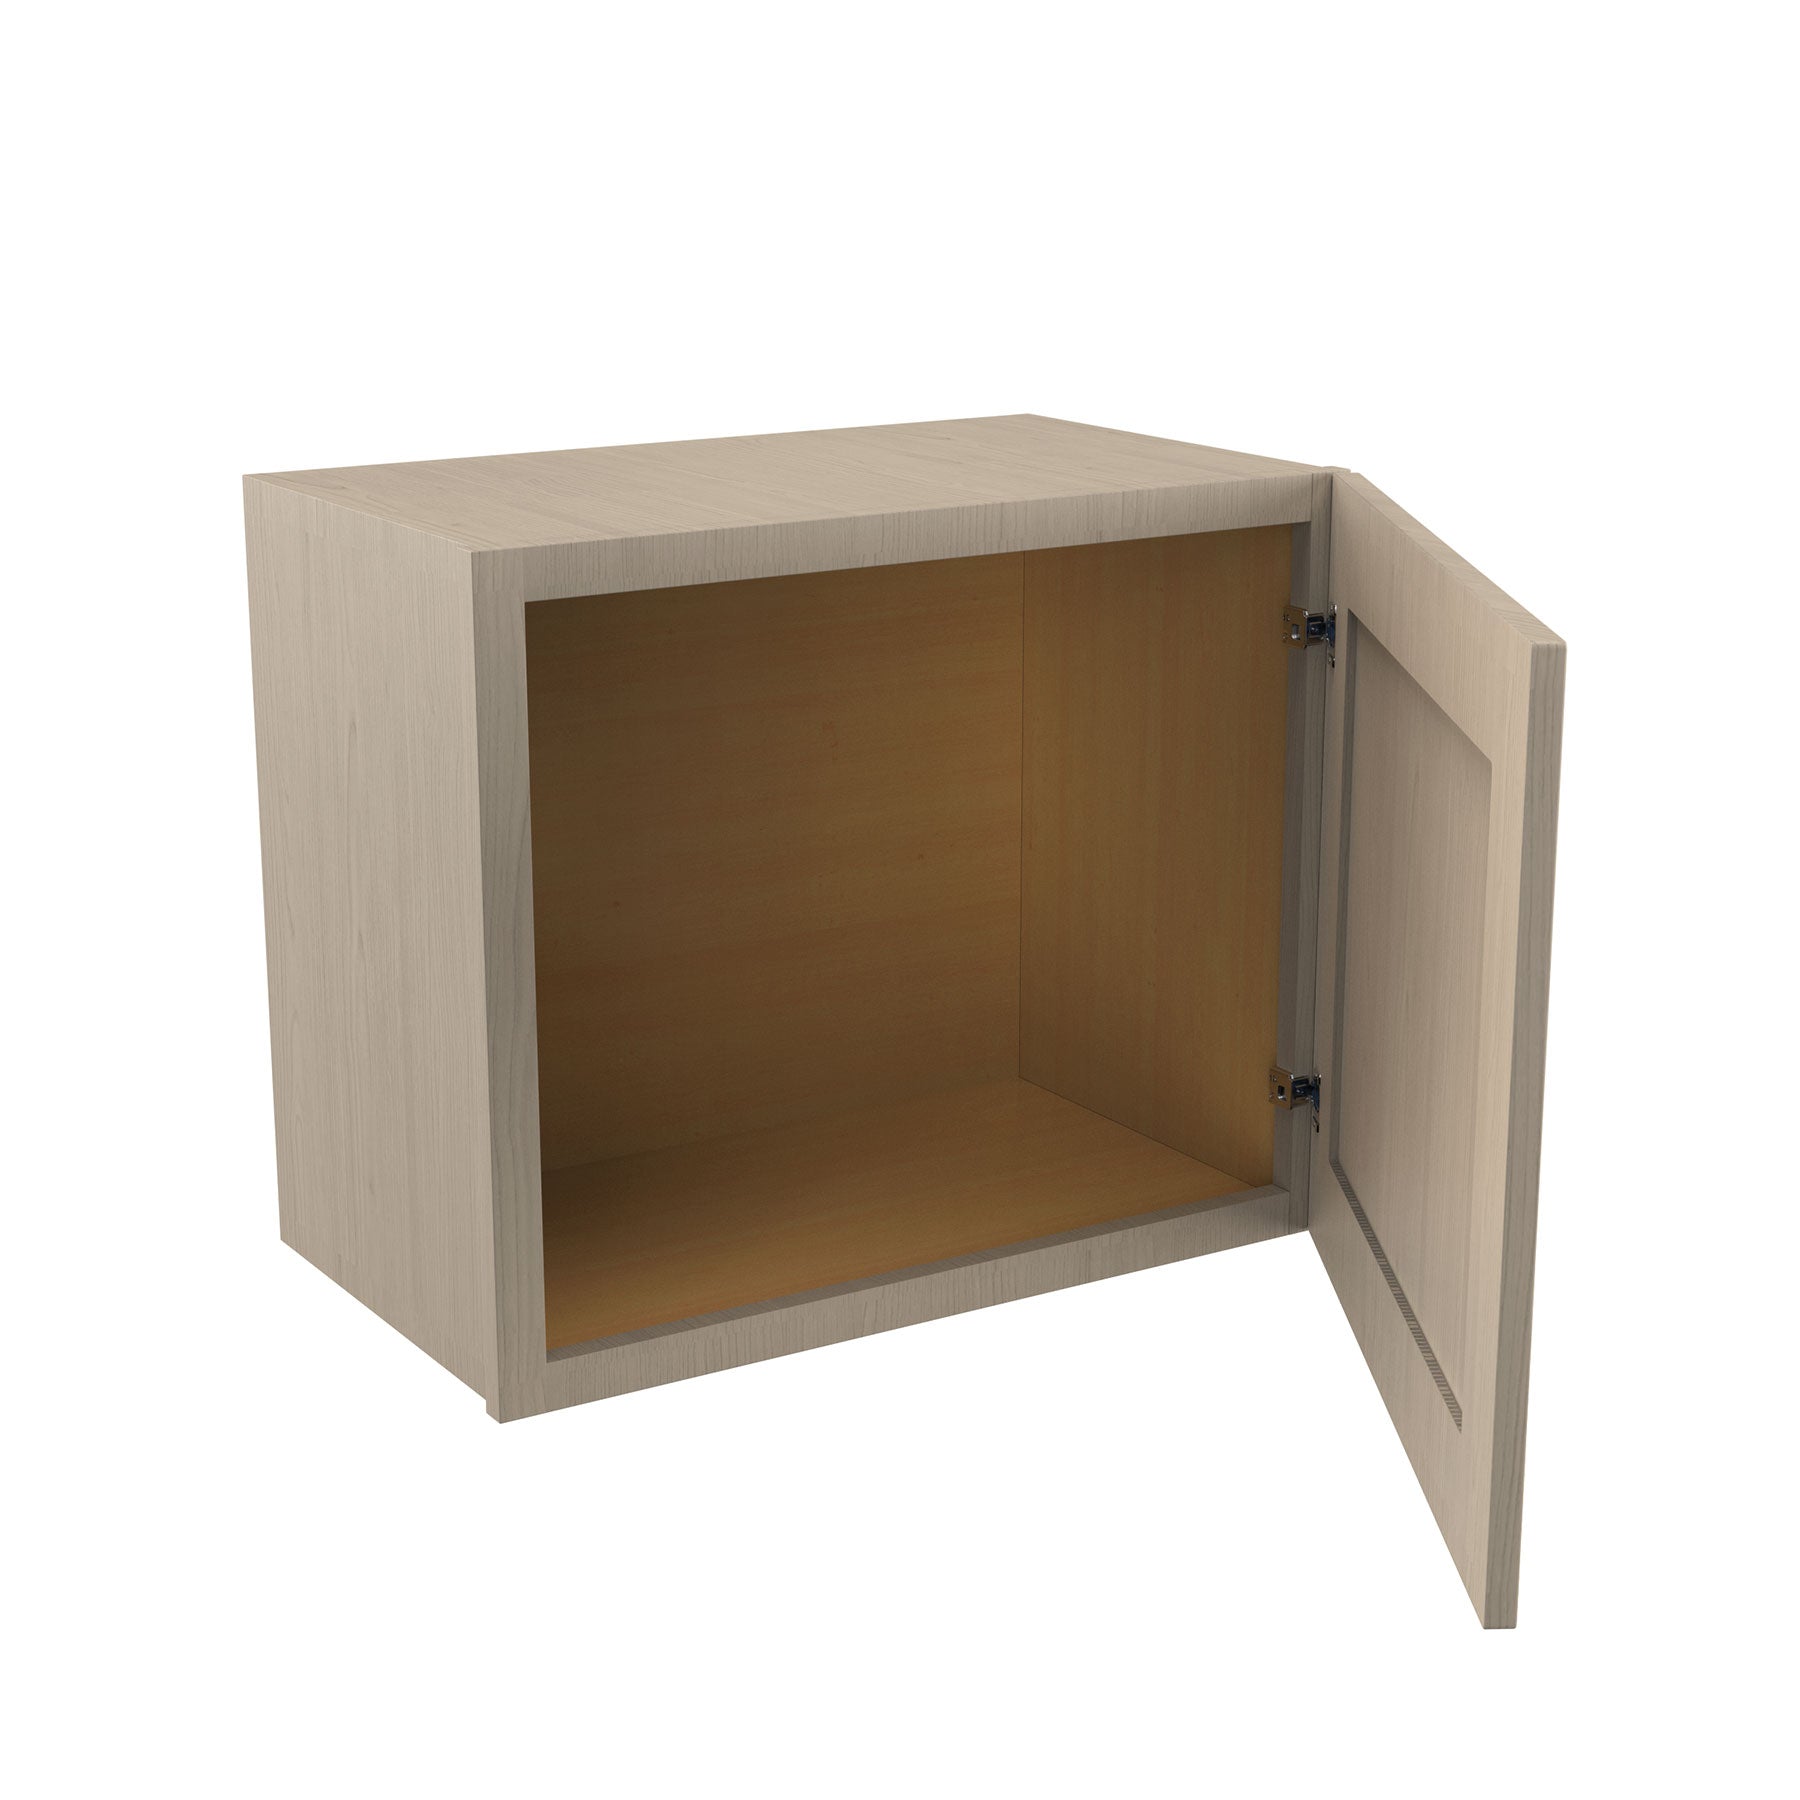 Single Door Wall Kitchen Cabinet |Elegant Stone |15W x15H x12D